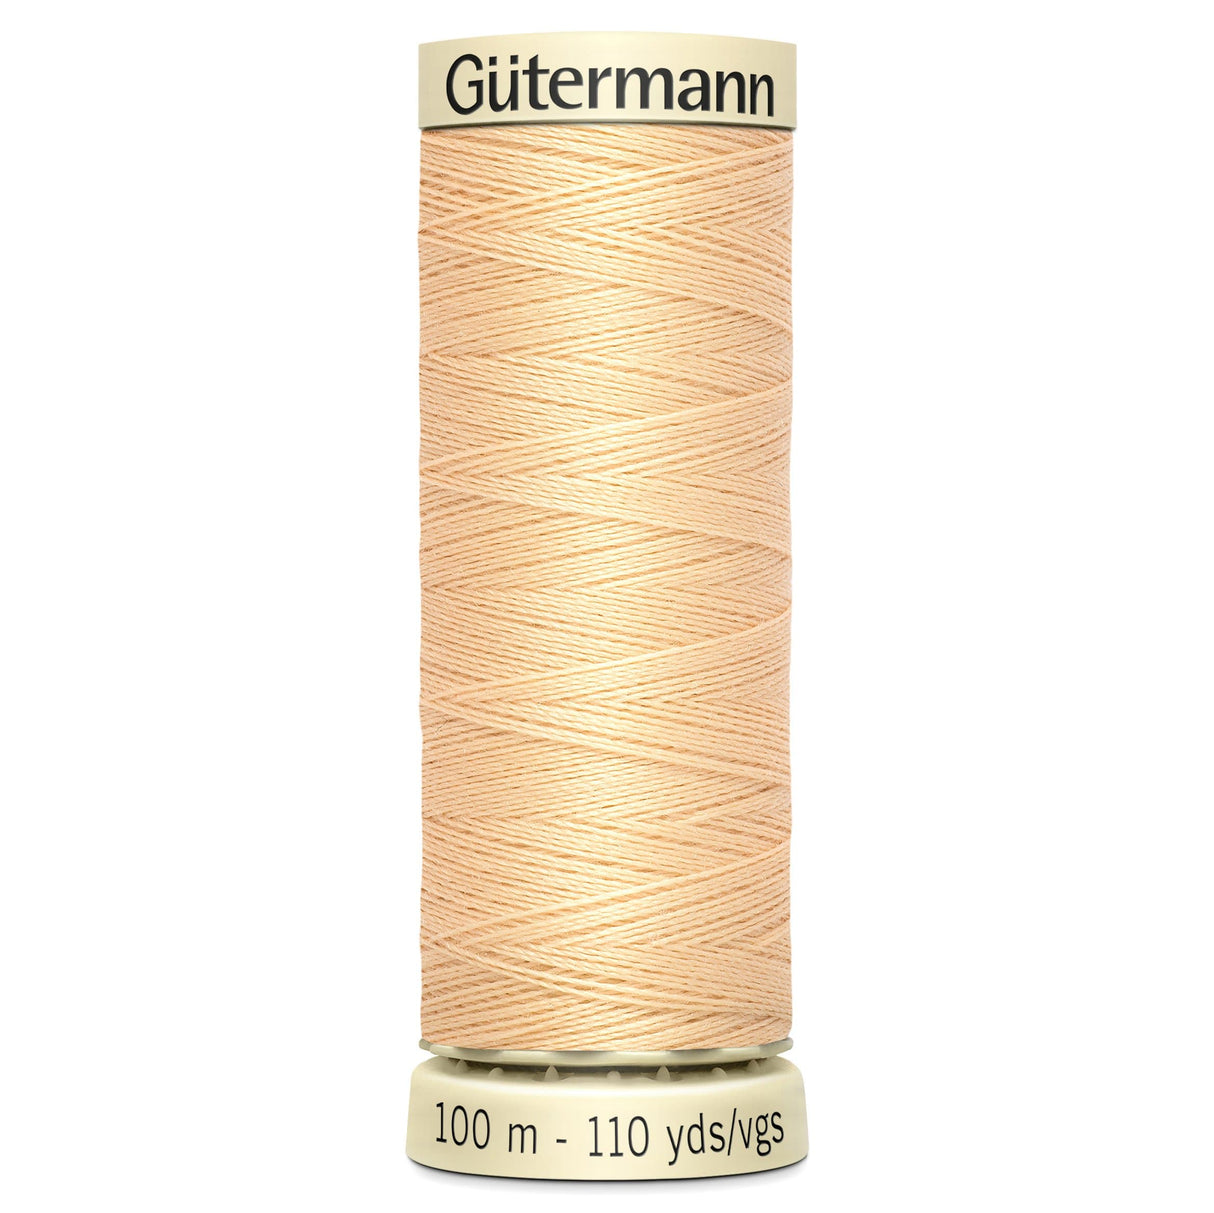 Groves Haberdashery 6 Gutermann Thread Sewing Cotton 100 m Black to Pink